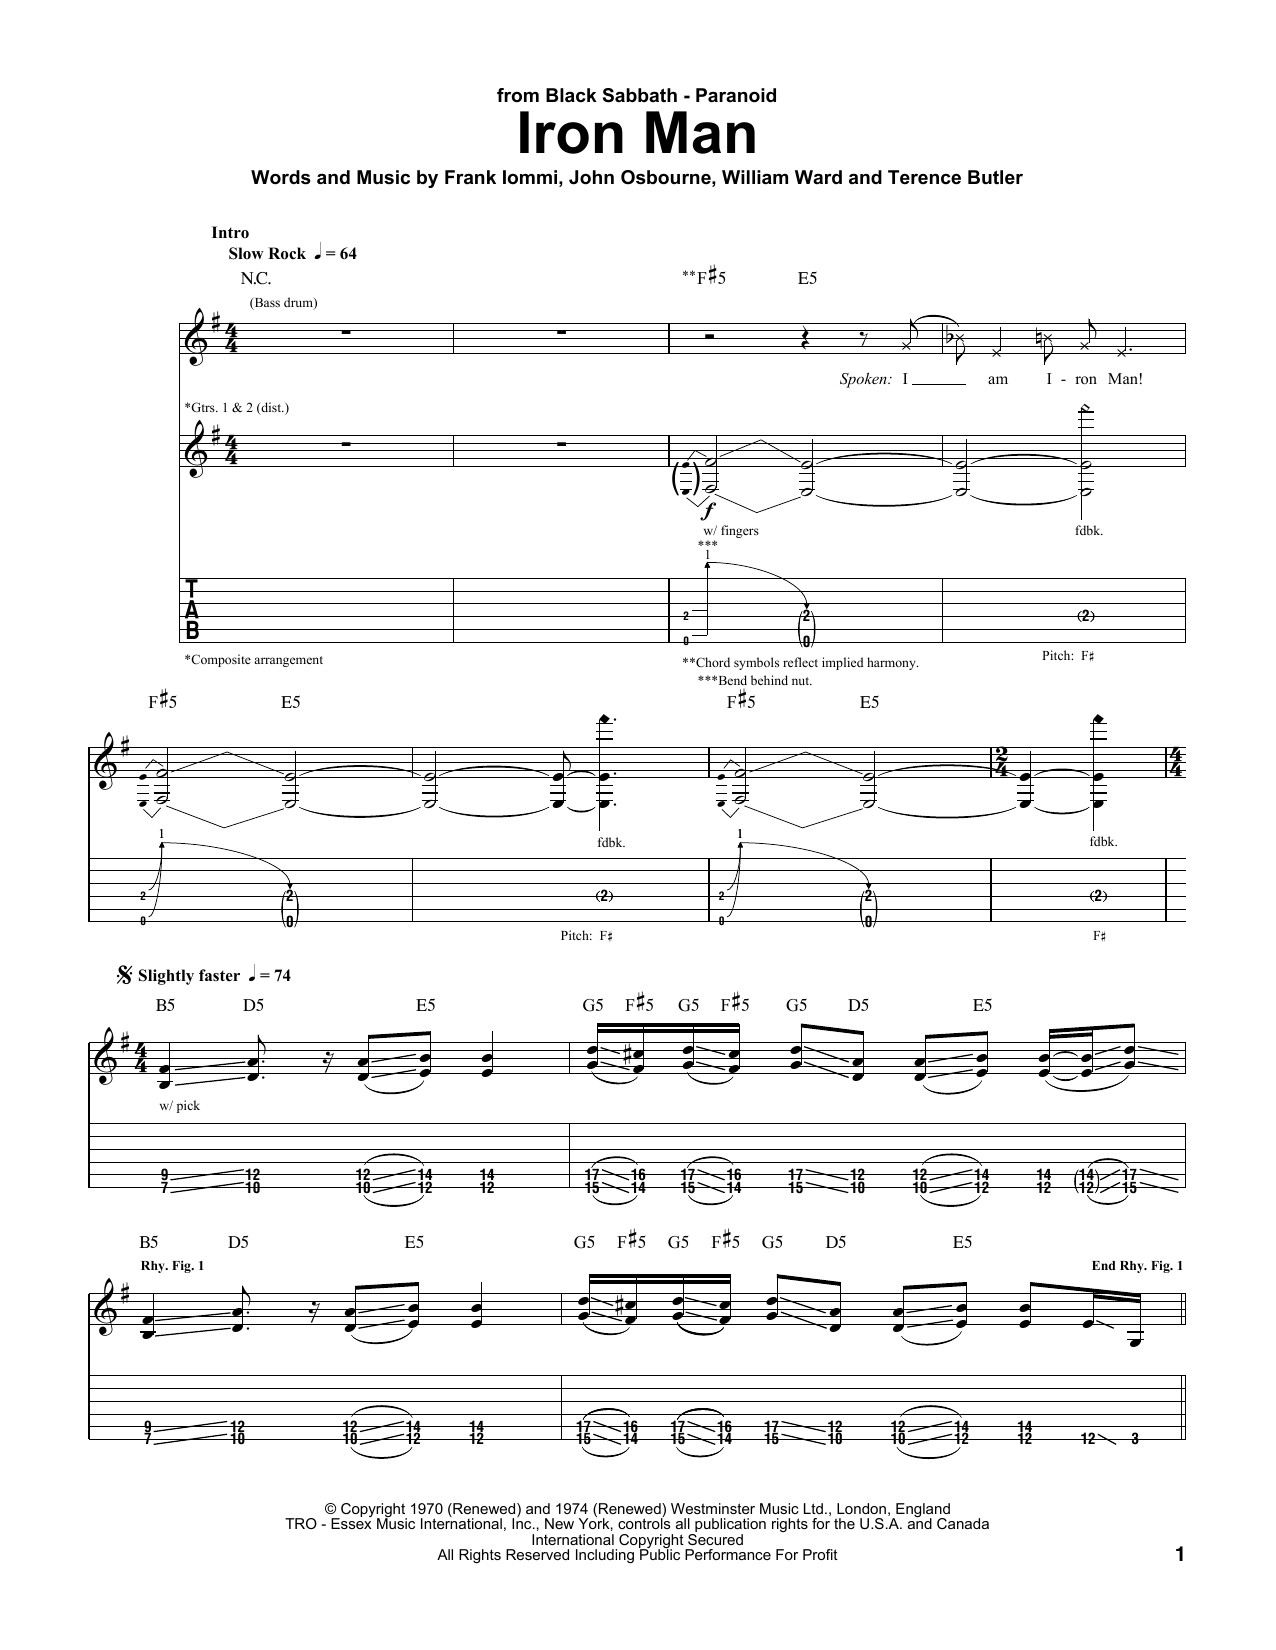 Black Sabbath Iron Man Sheet Music Notes & Chords for Drums - Download or Print PDF